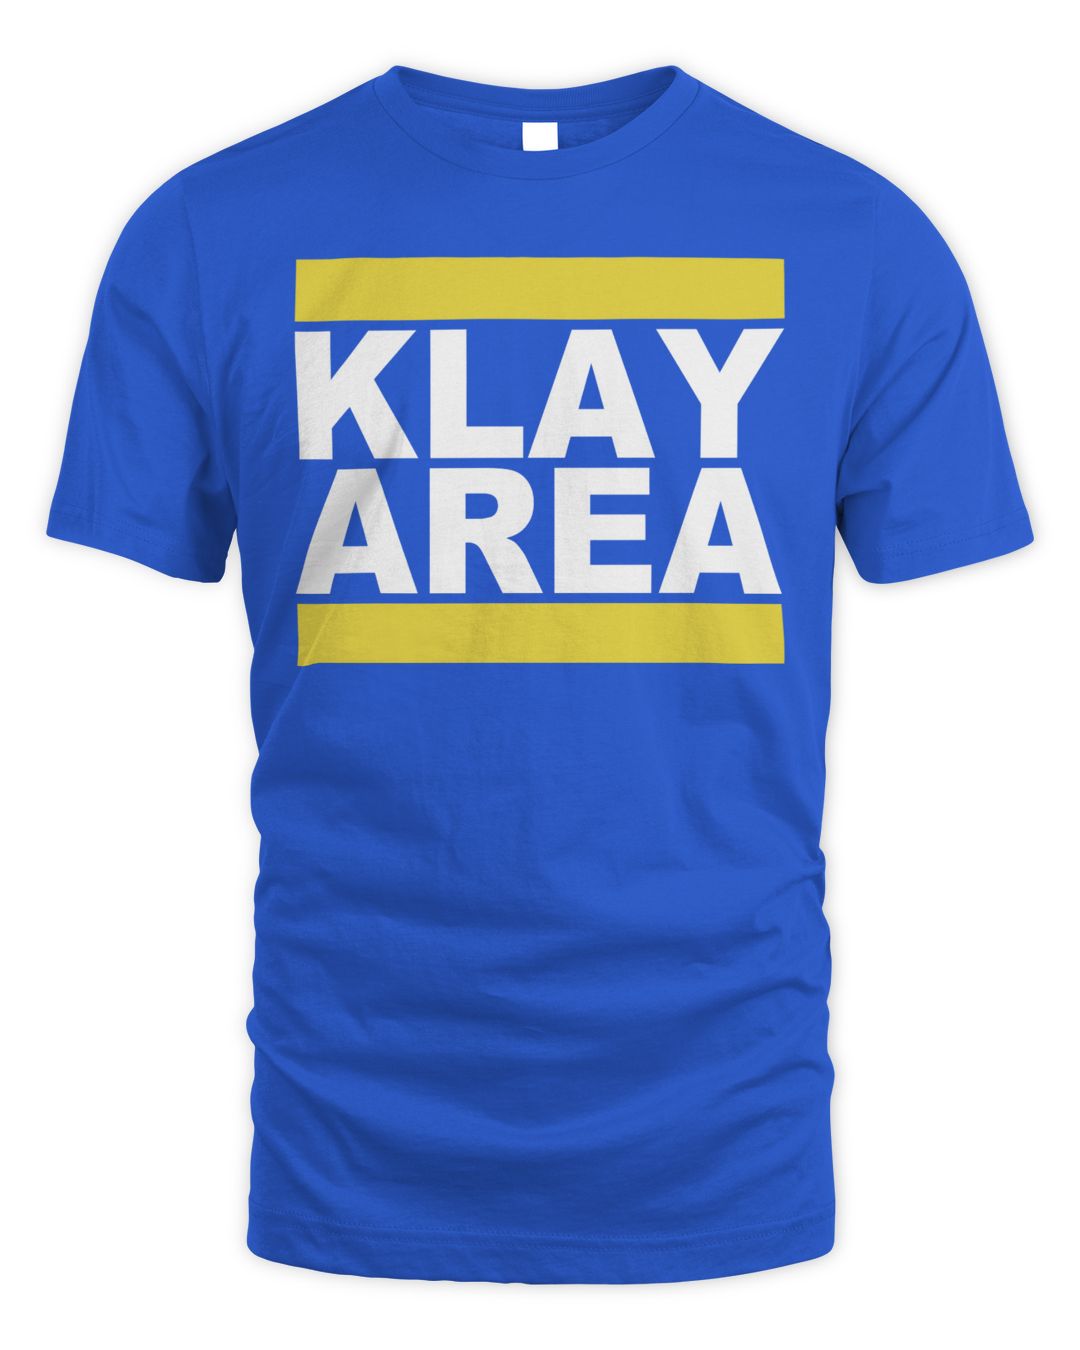 Klay Area Shirt